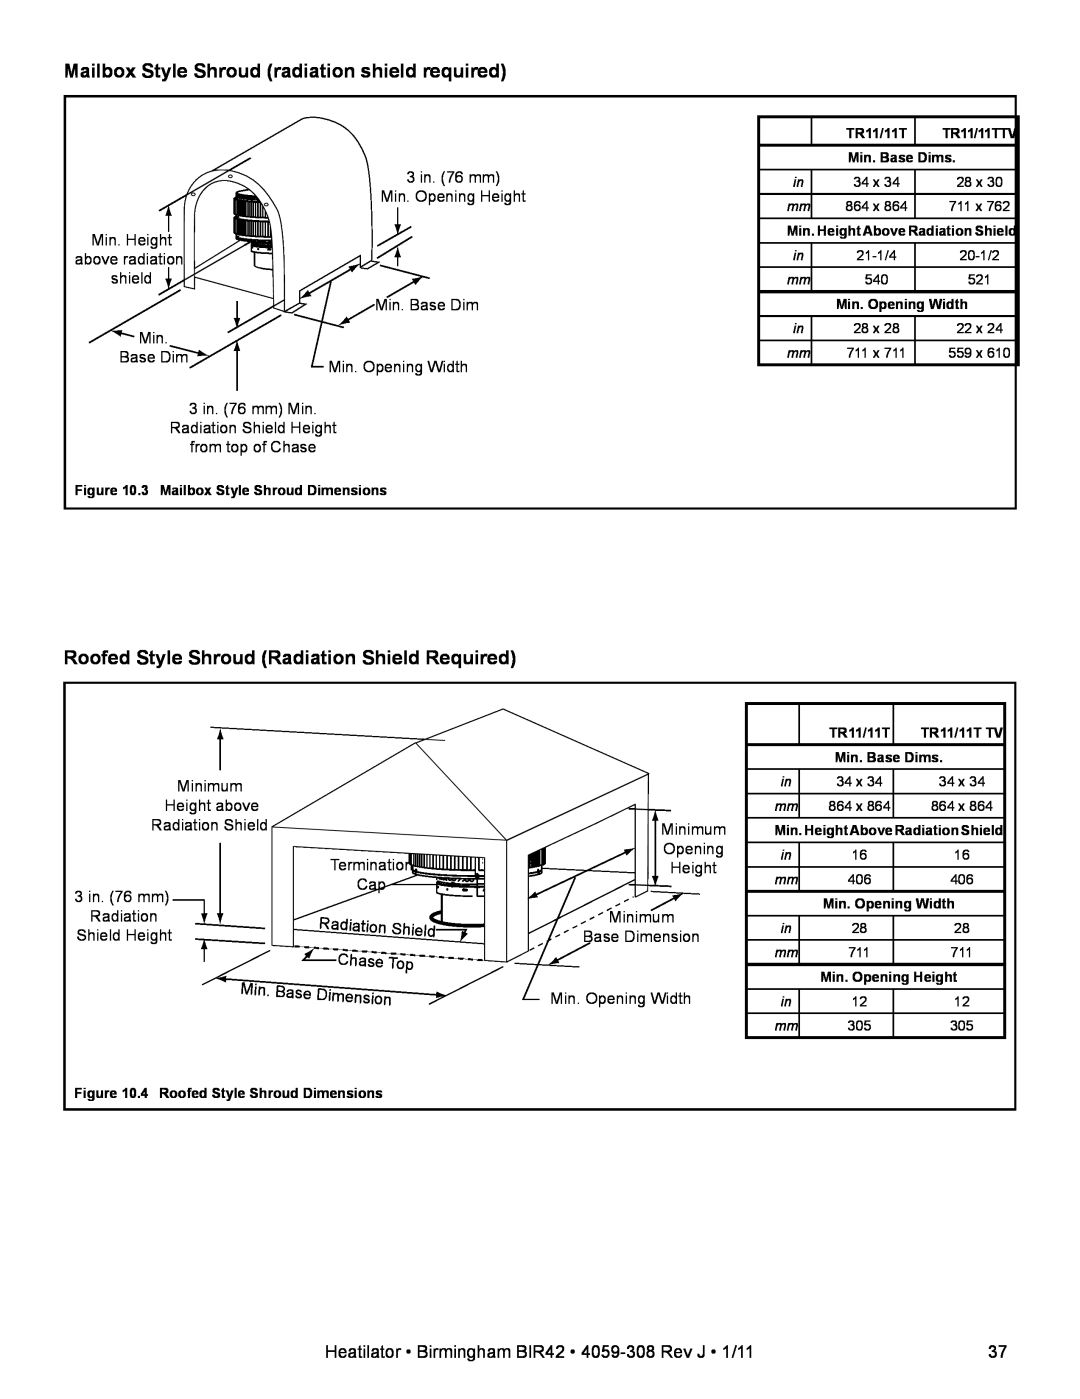 Heatiator BIR42 Mailbox Style Shroud radiation shield required, Roofed Style Shroud Radiation Shield Required, Minimum 